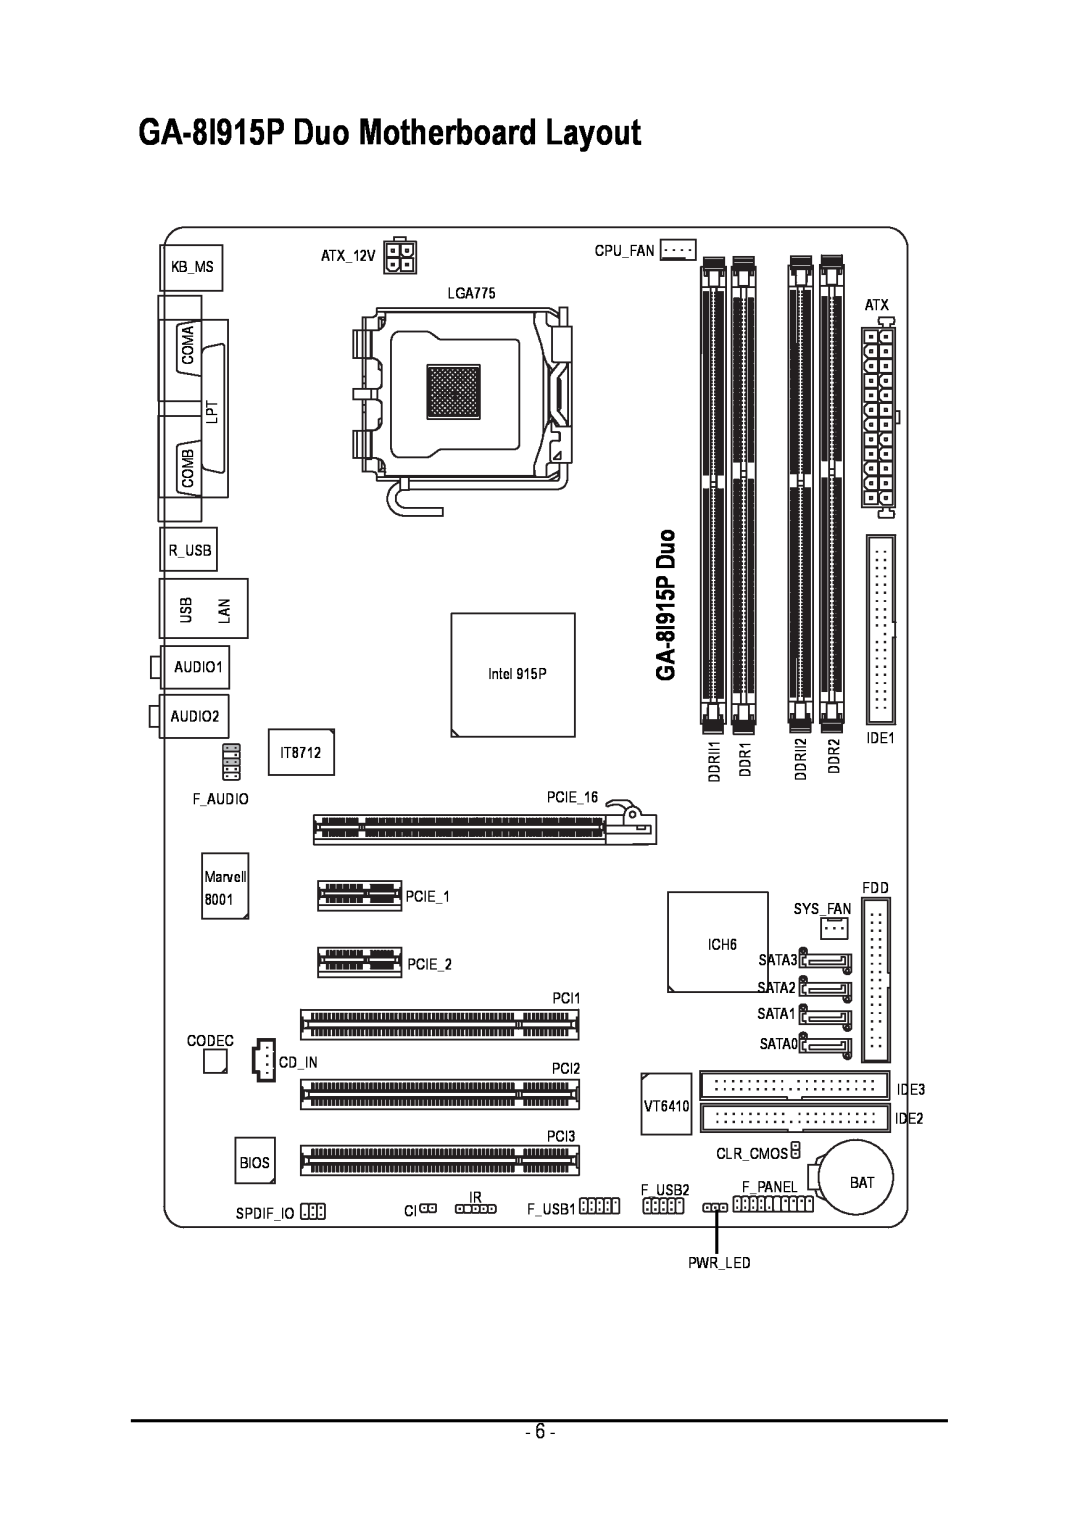 Gigabyte GA-8I915P DUO user manual GA-8I915P Duo Motherboard Layout, 8I915PDuo 